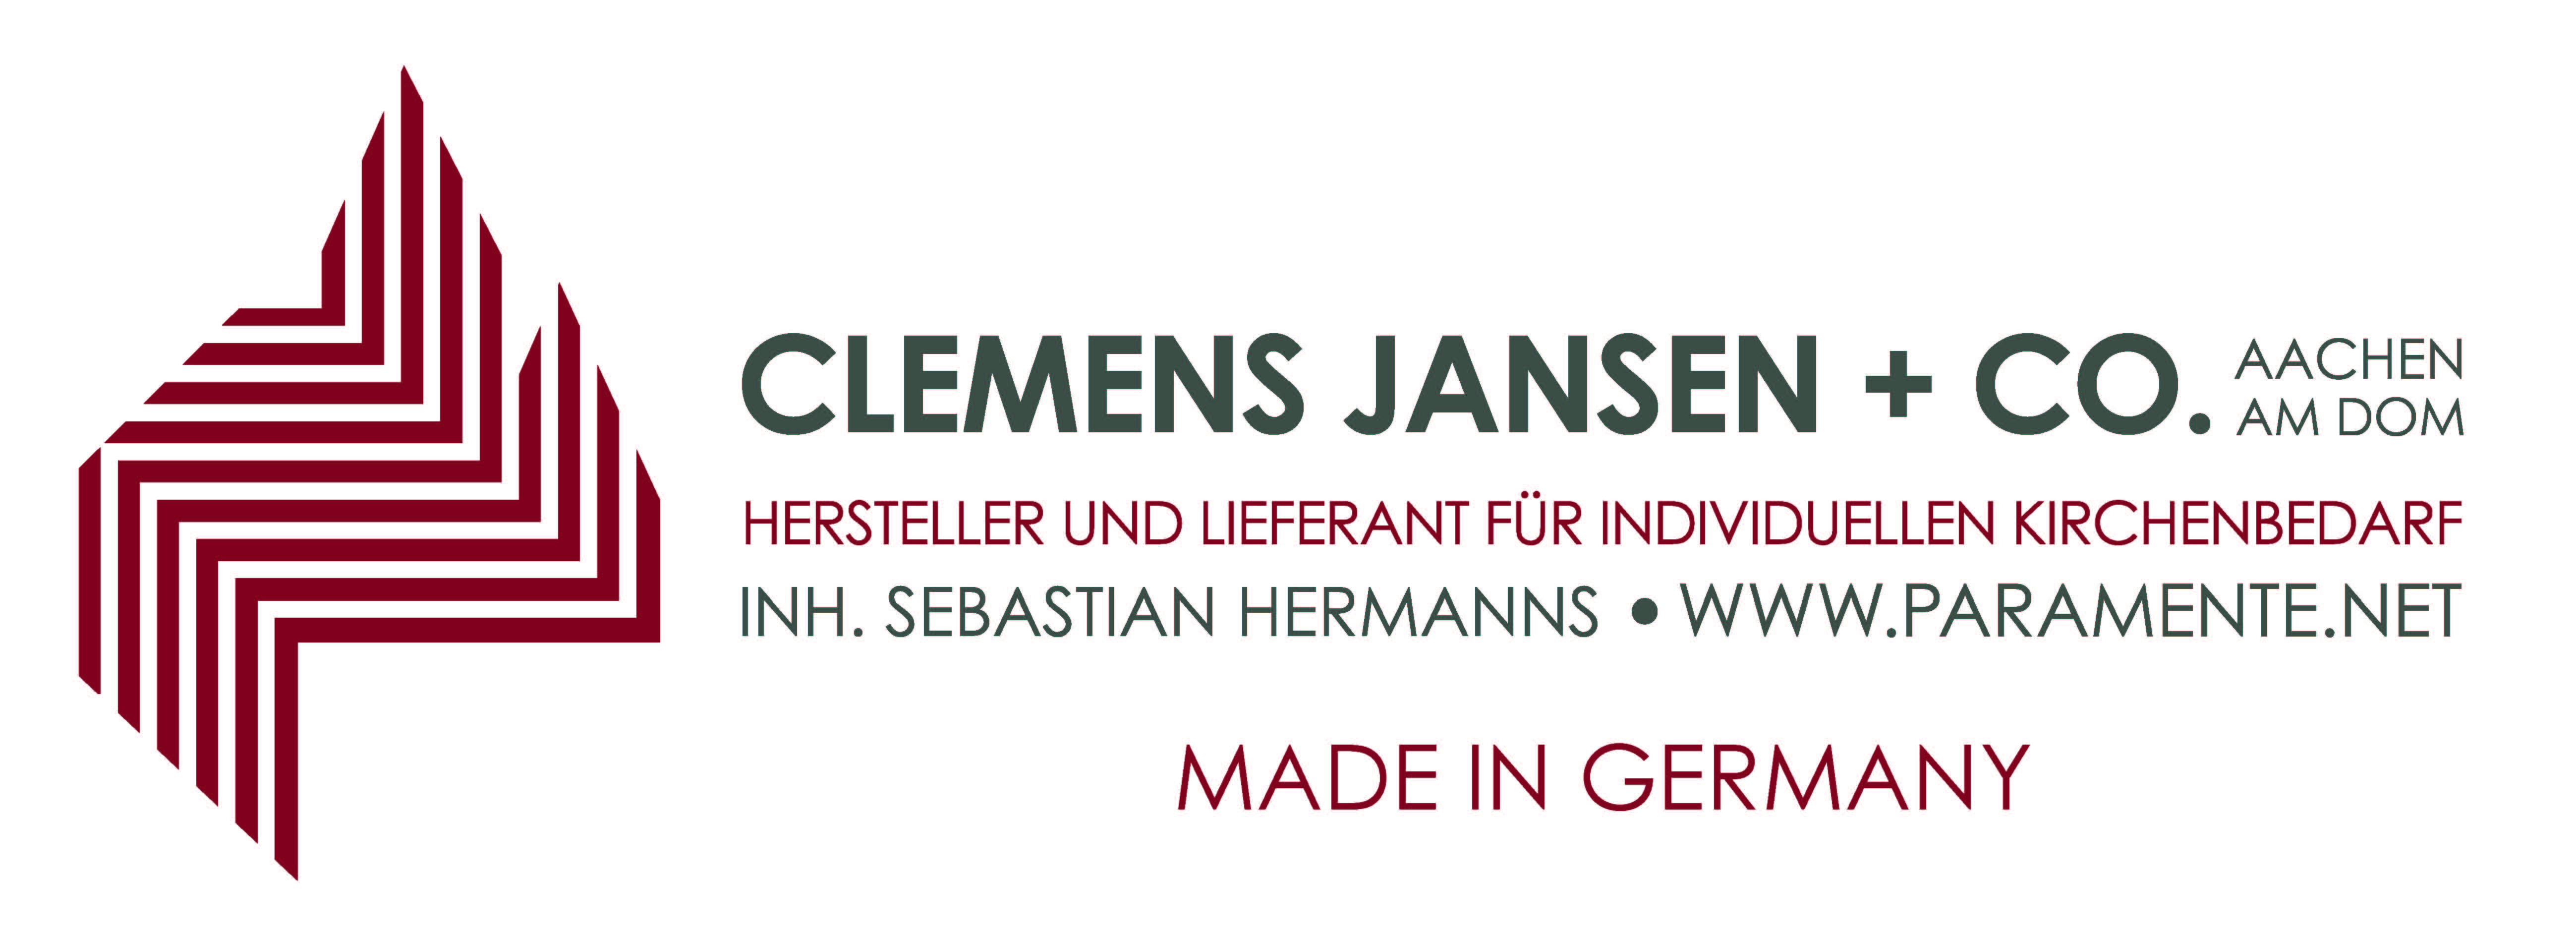 Clemens Jansen & Co.